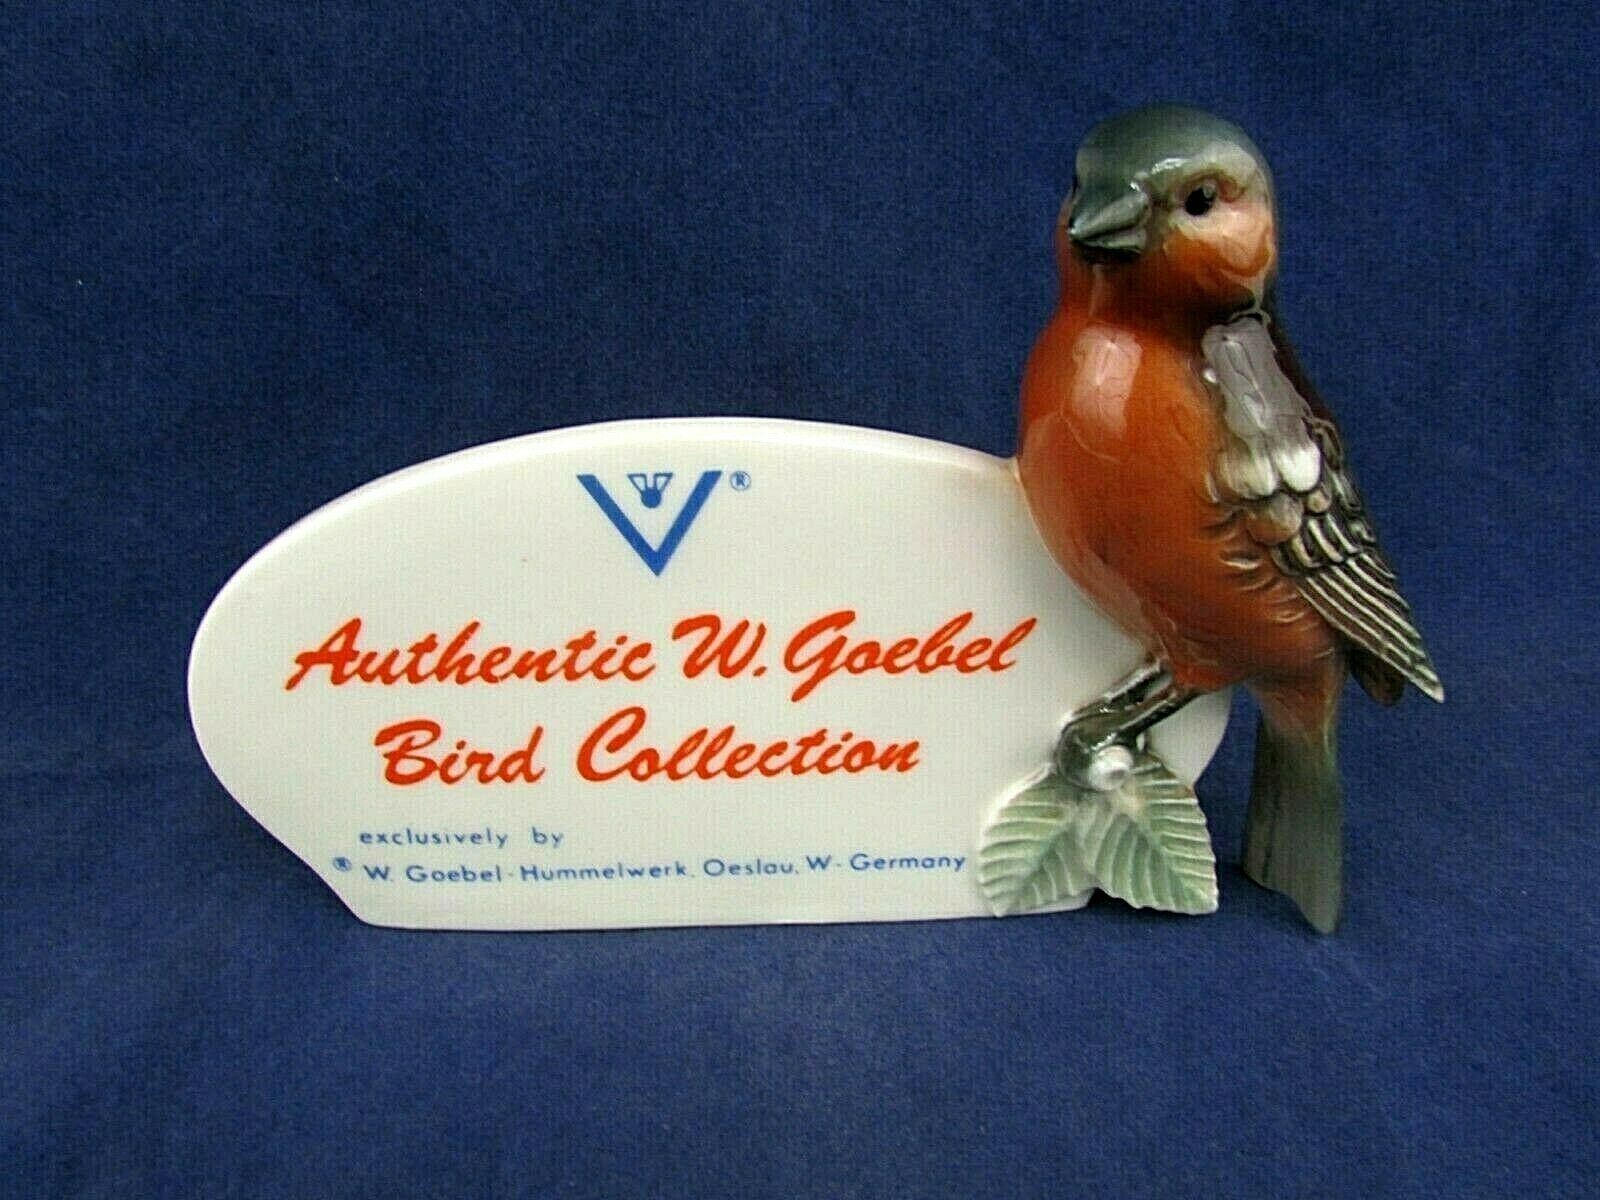 Vtg Goebel porcelain Advertising Sign w/ bird Bird Collection Dealer 7” W 1960's - $54.45